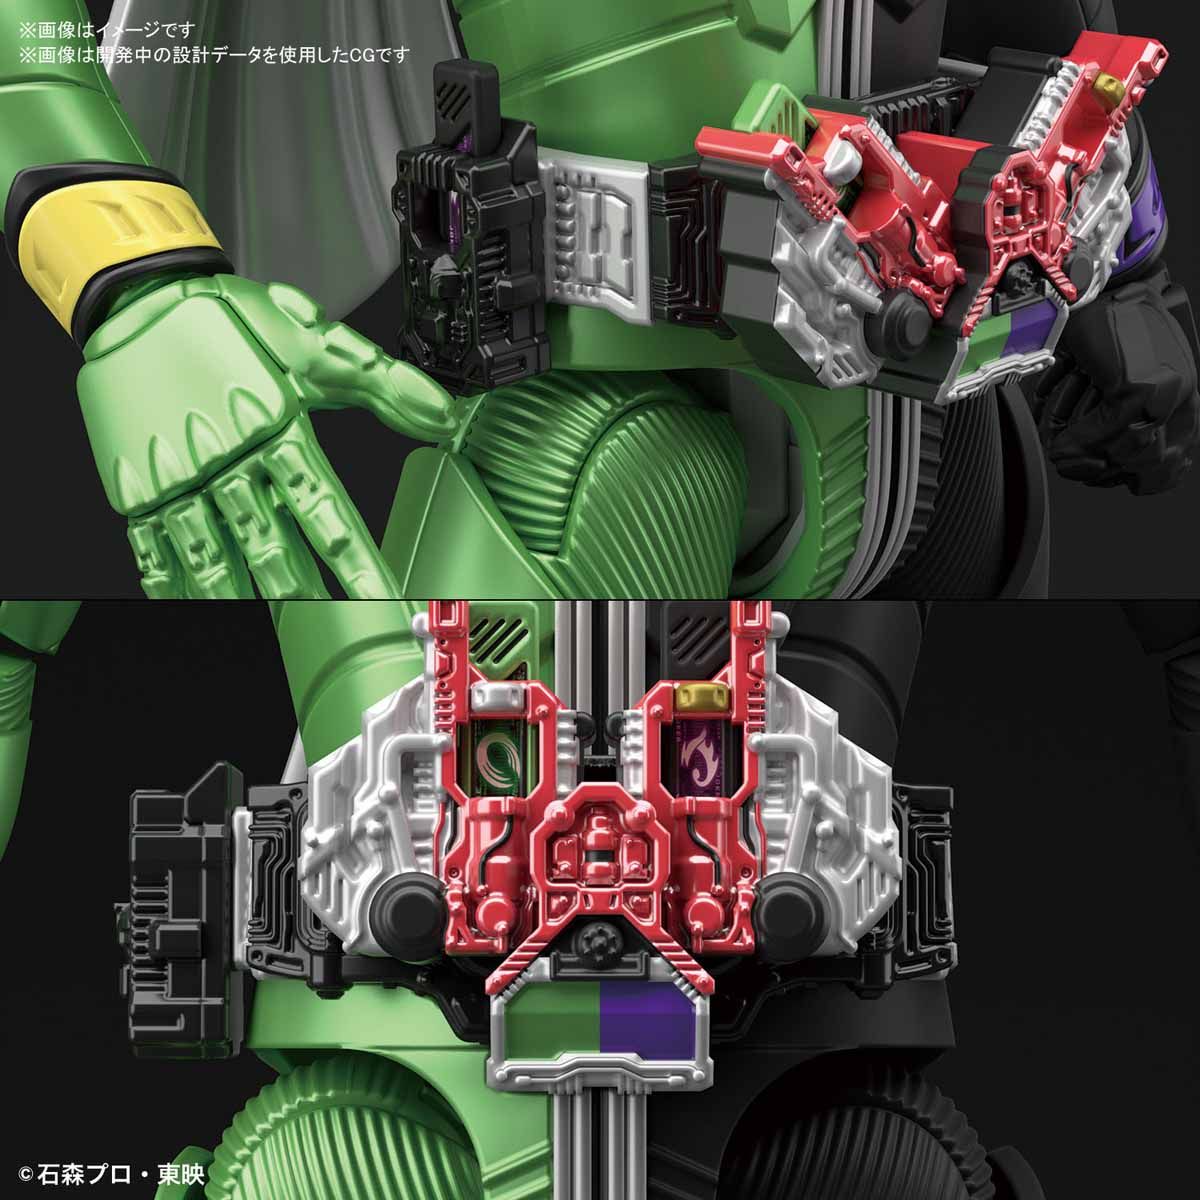 Kamen Rider Double - Figure-rise Standard - Cyclone Joker